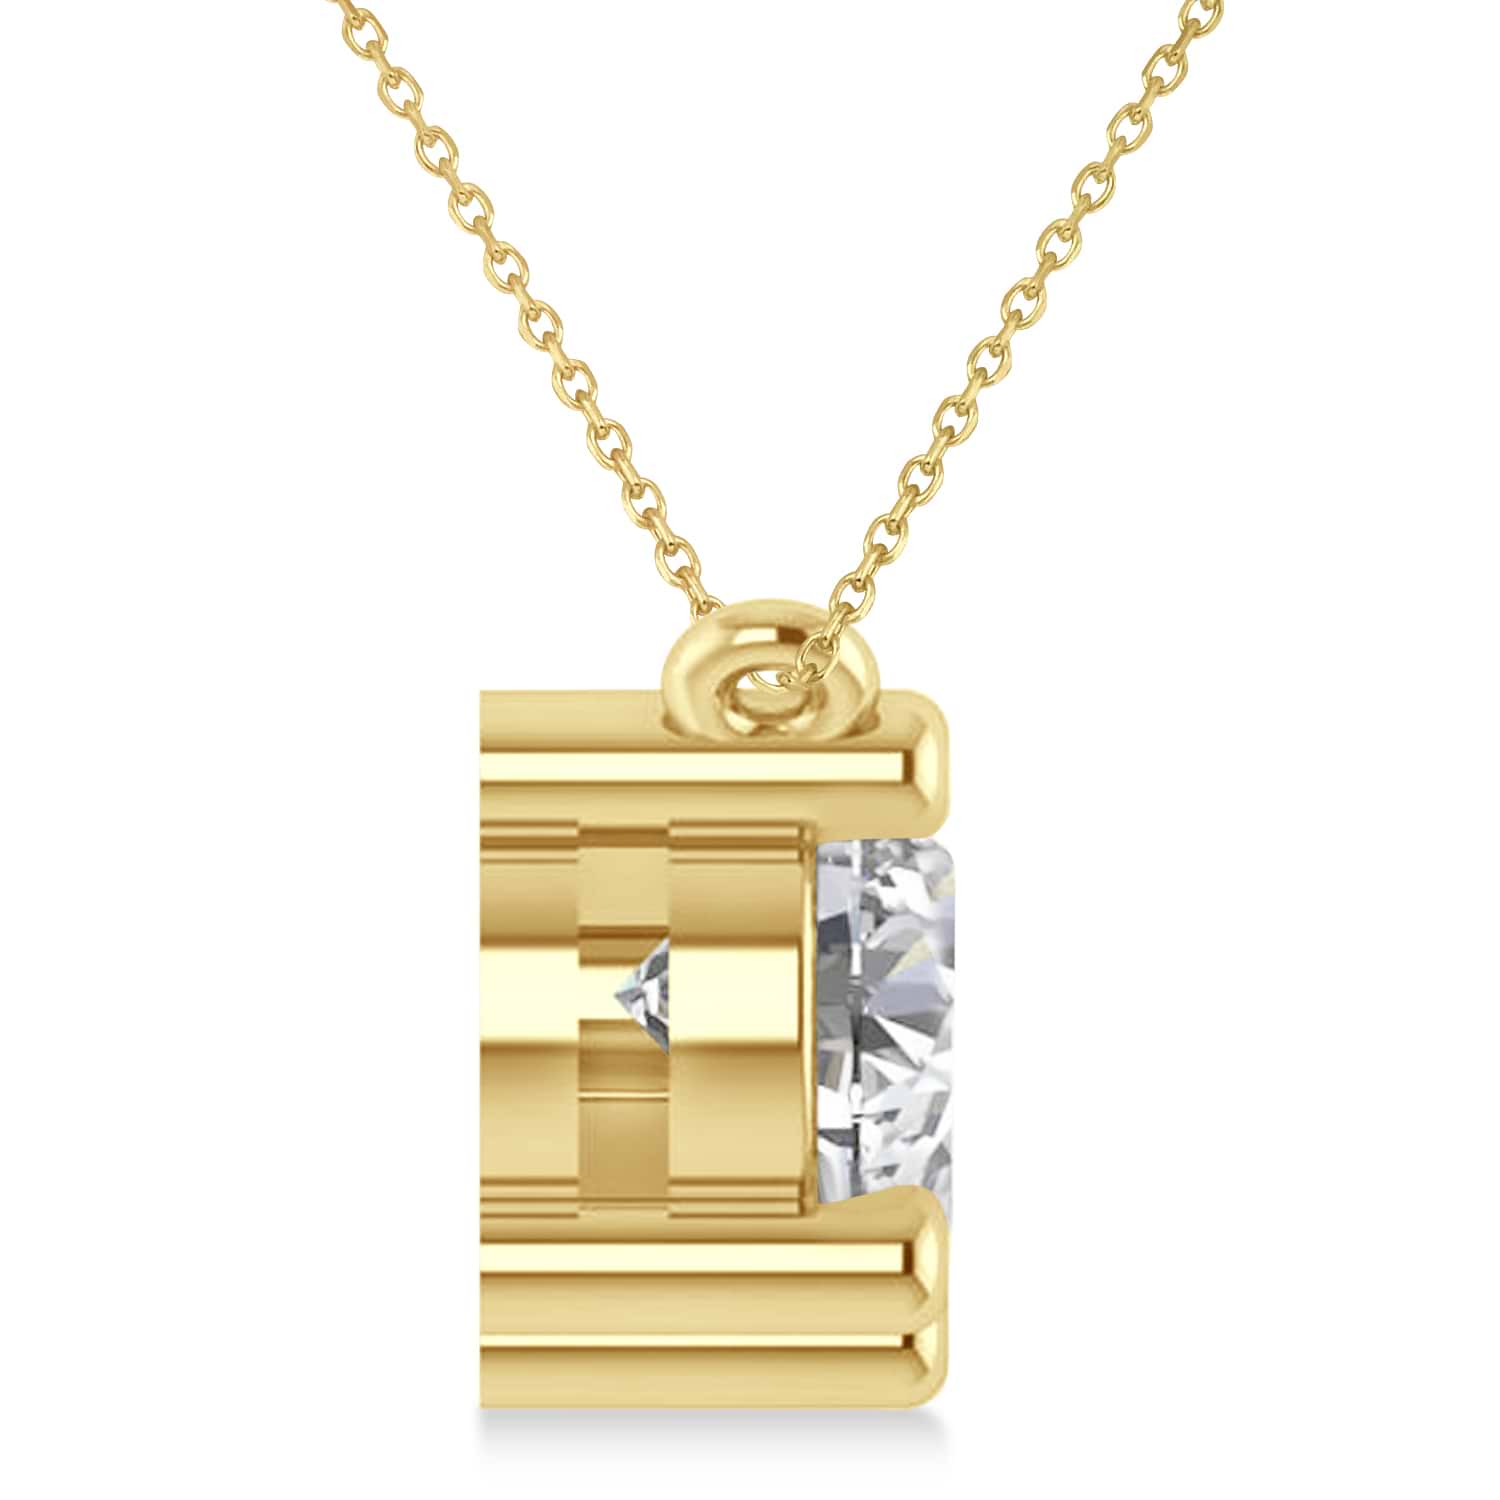 Three Stone Diamond Pendant Necklace 14k Yellow Gold (3.00ct)